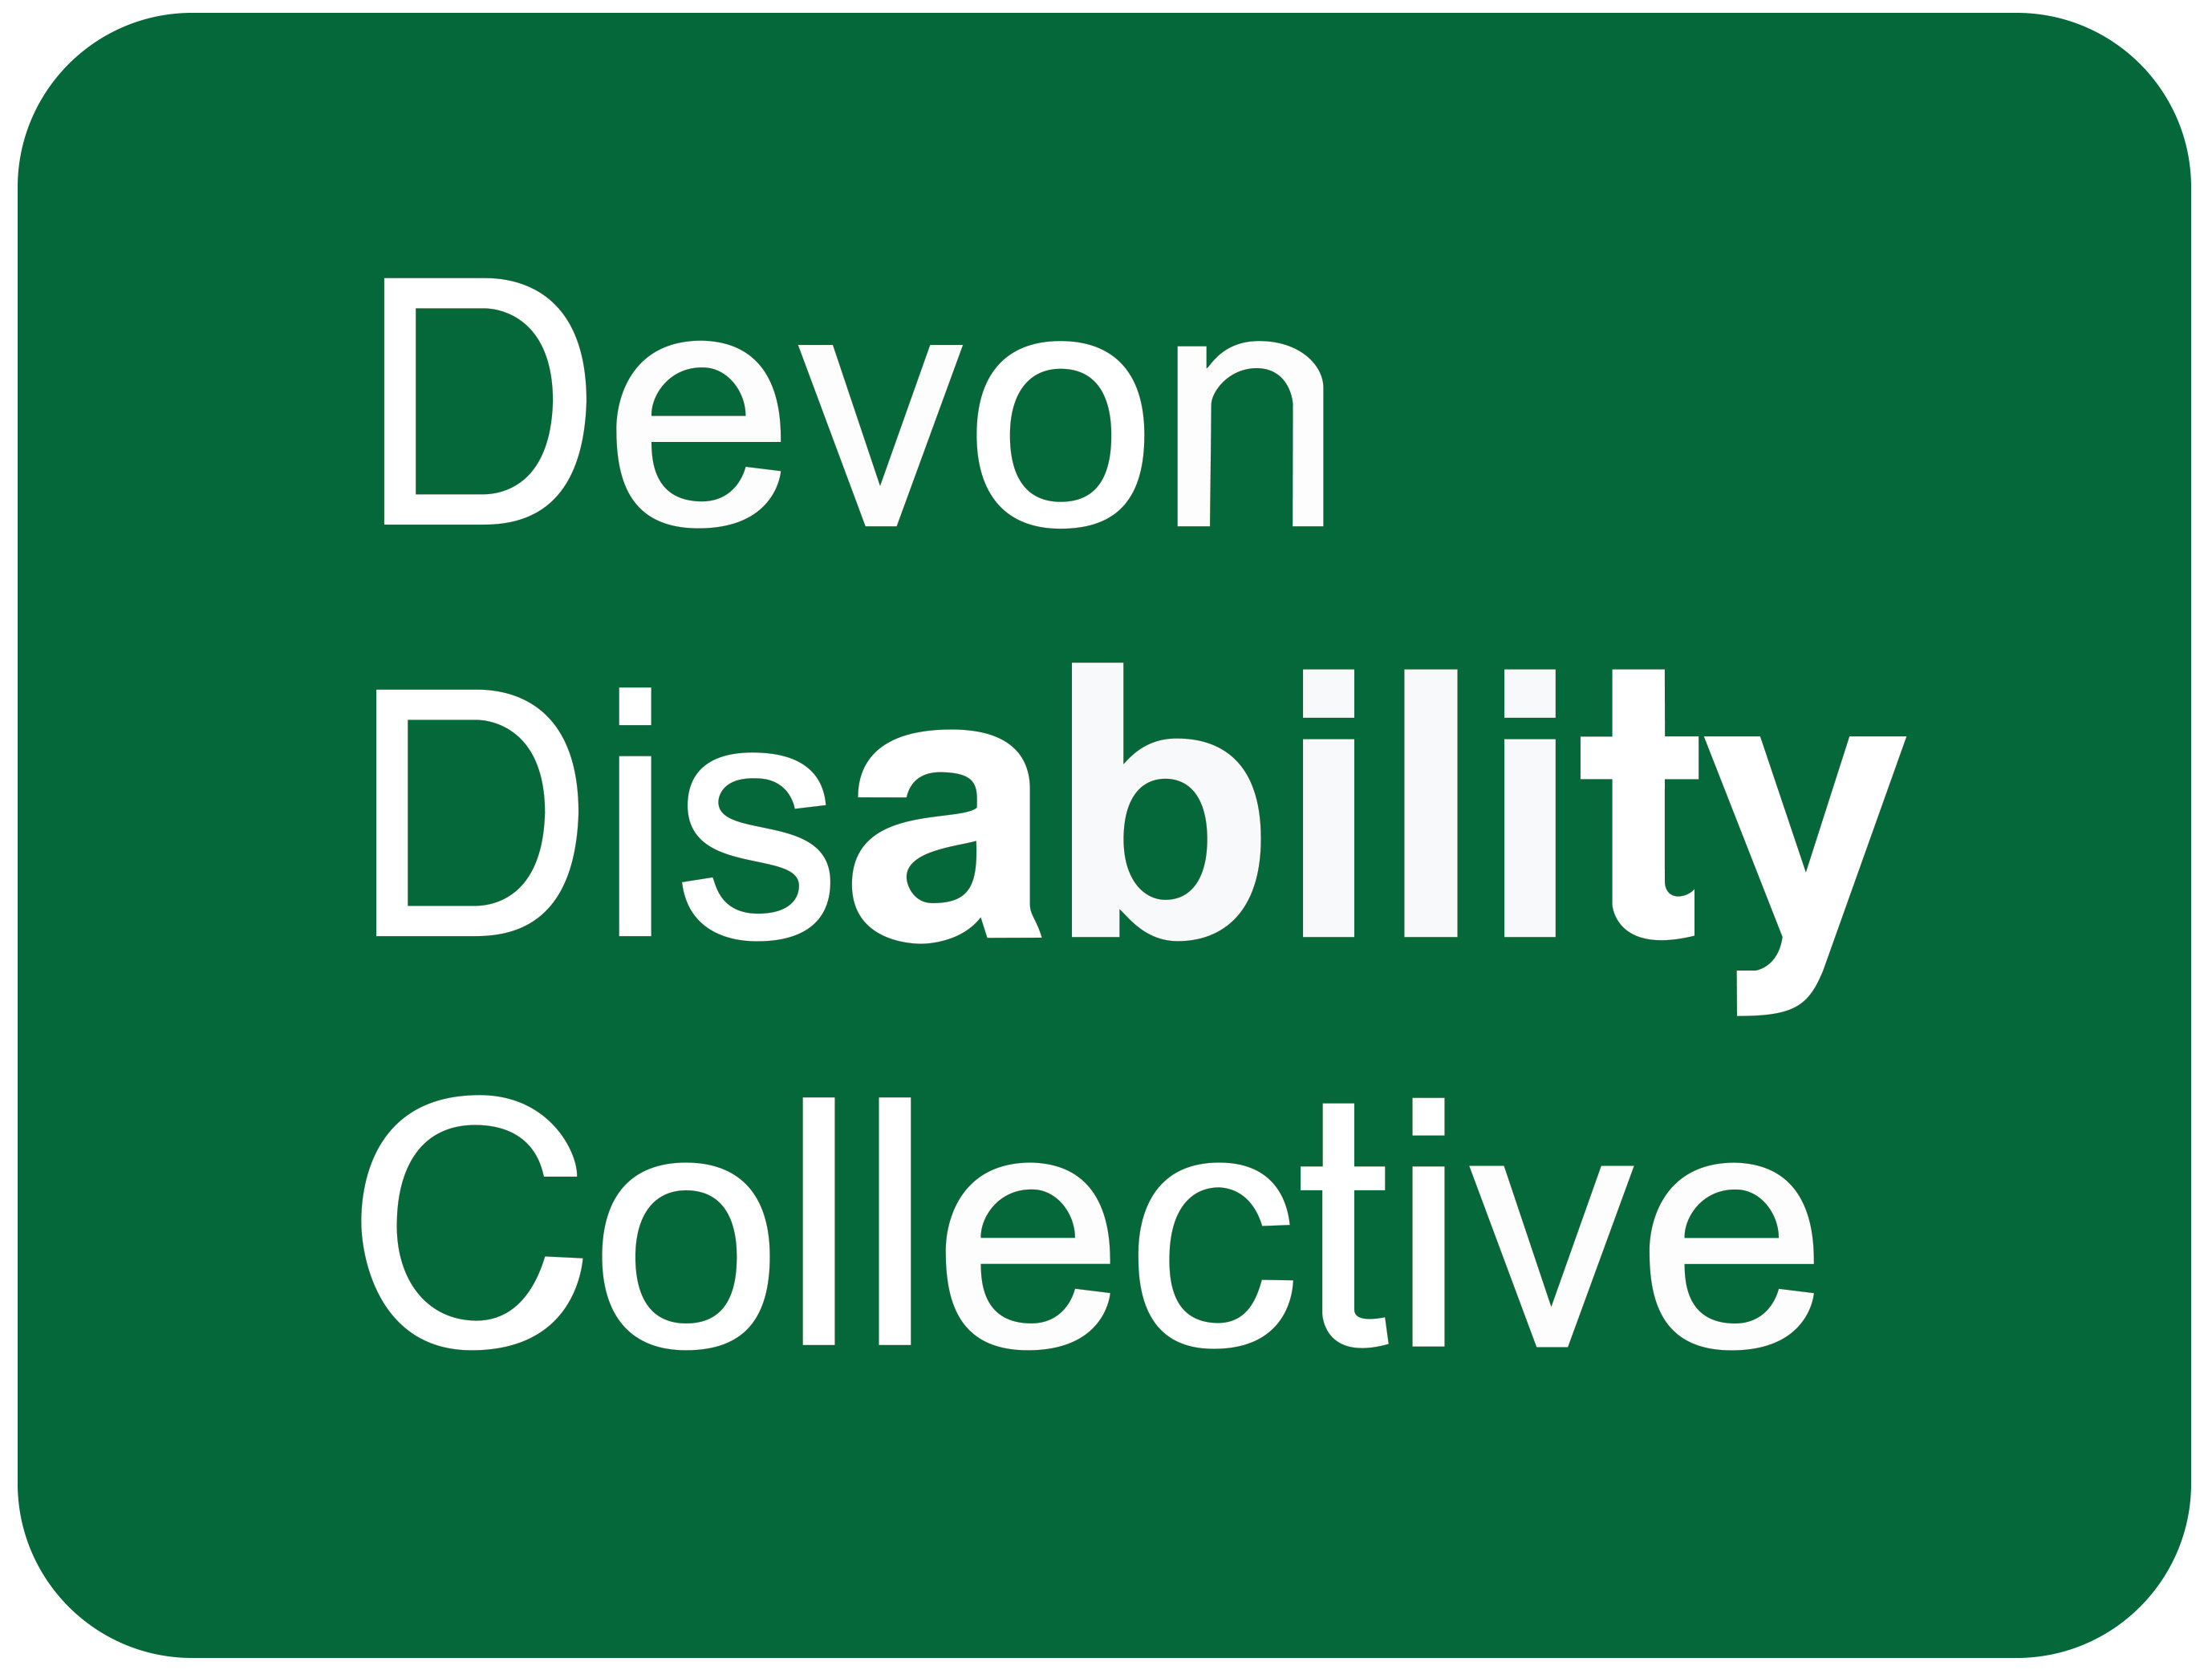 Devon Disability Collective